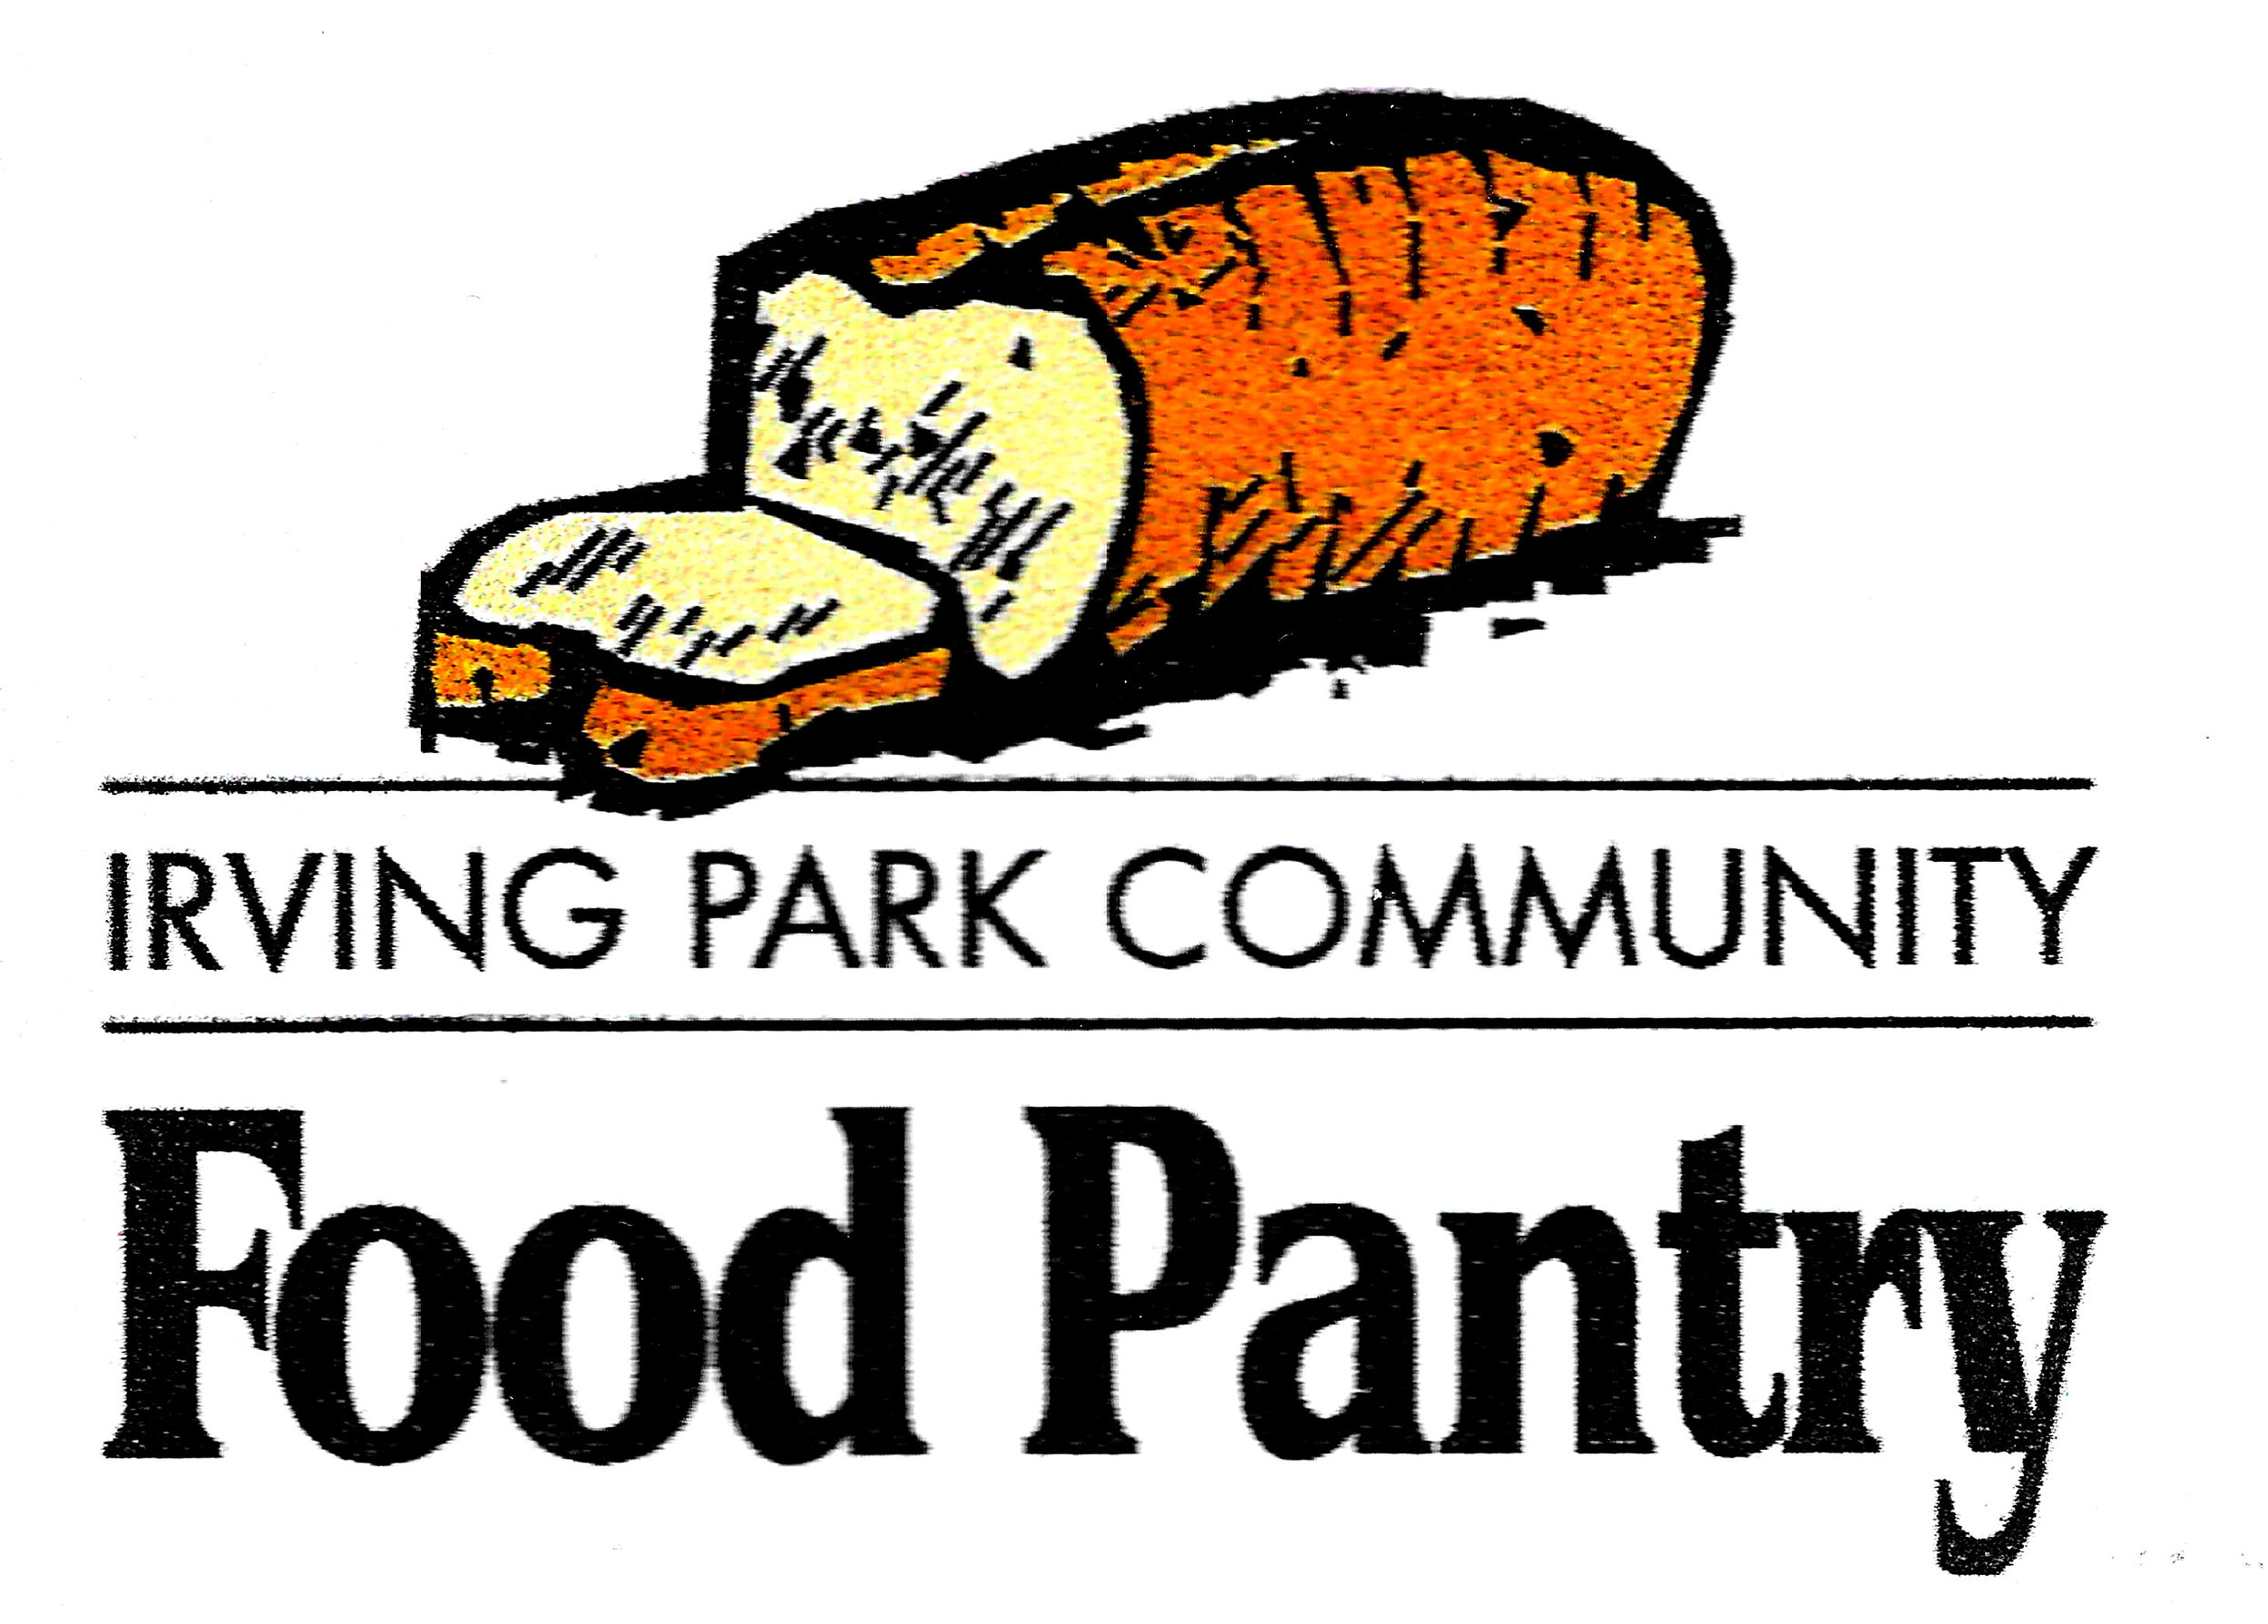 Community Food Pantry